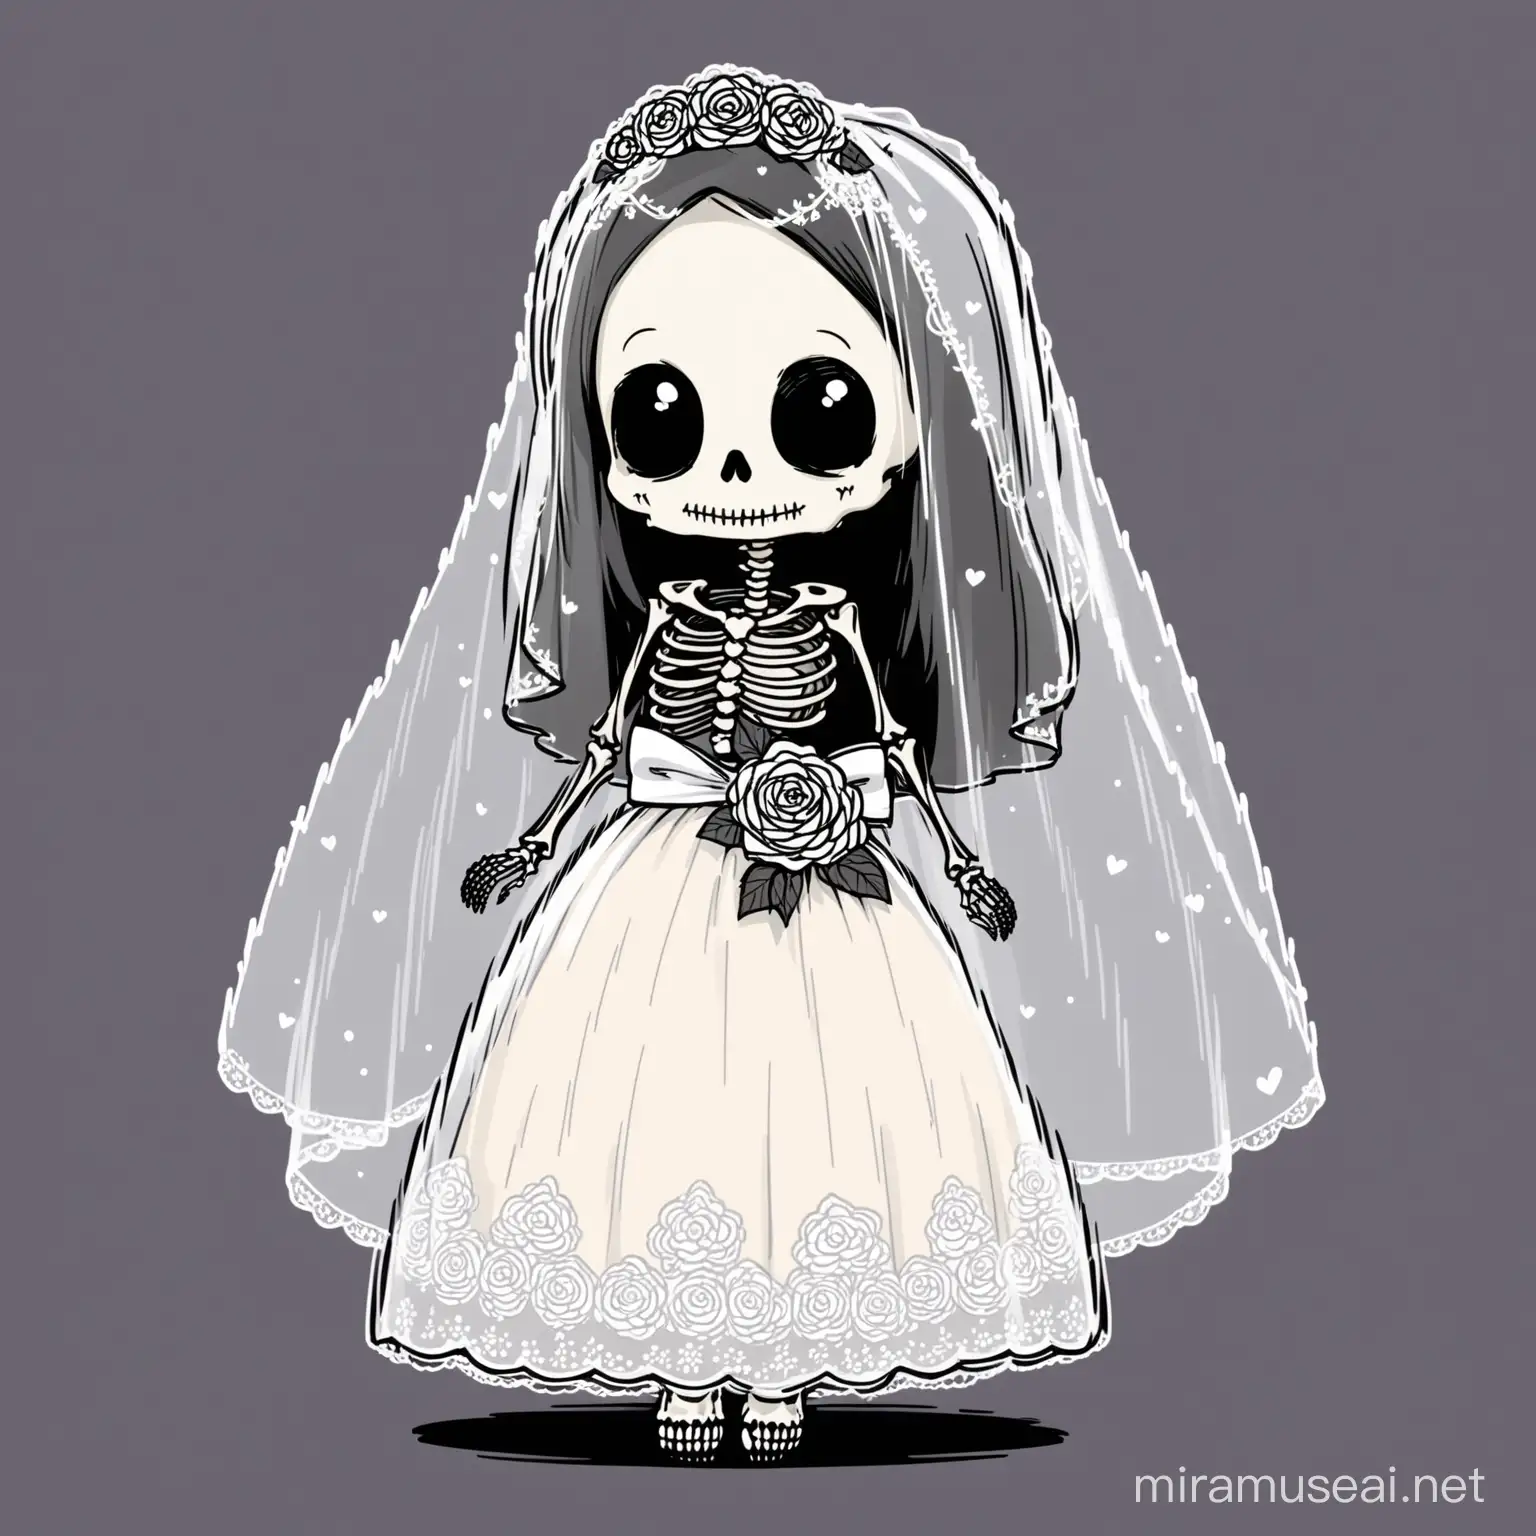 Adorable Skeleton Bride in Wedding Veil Drawing